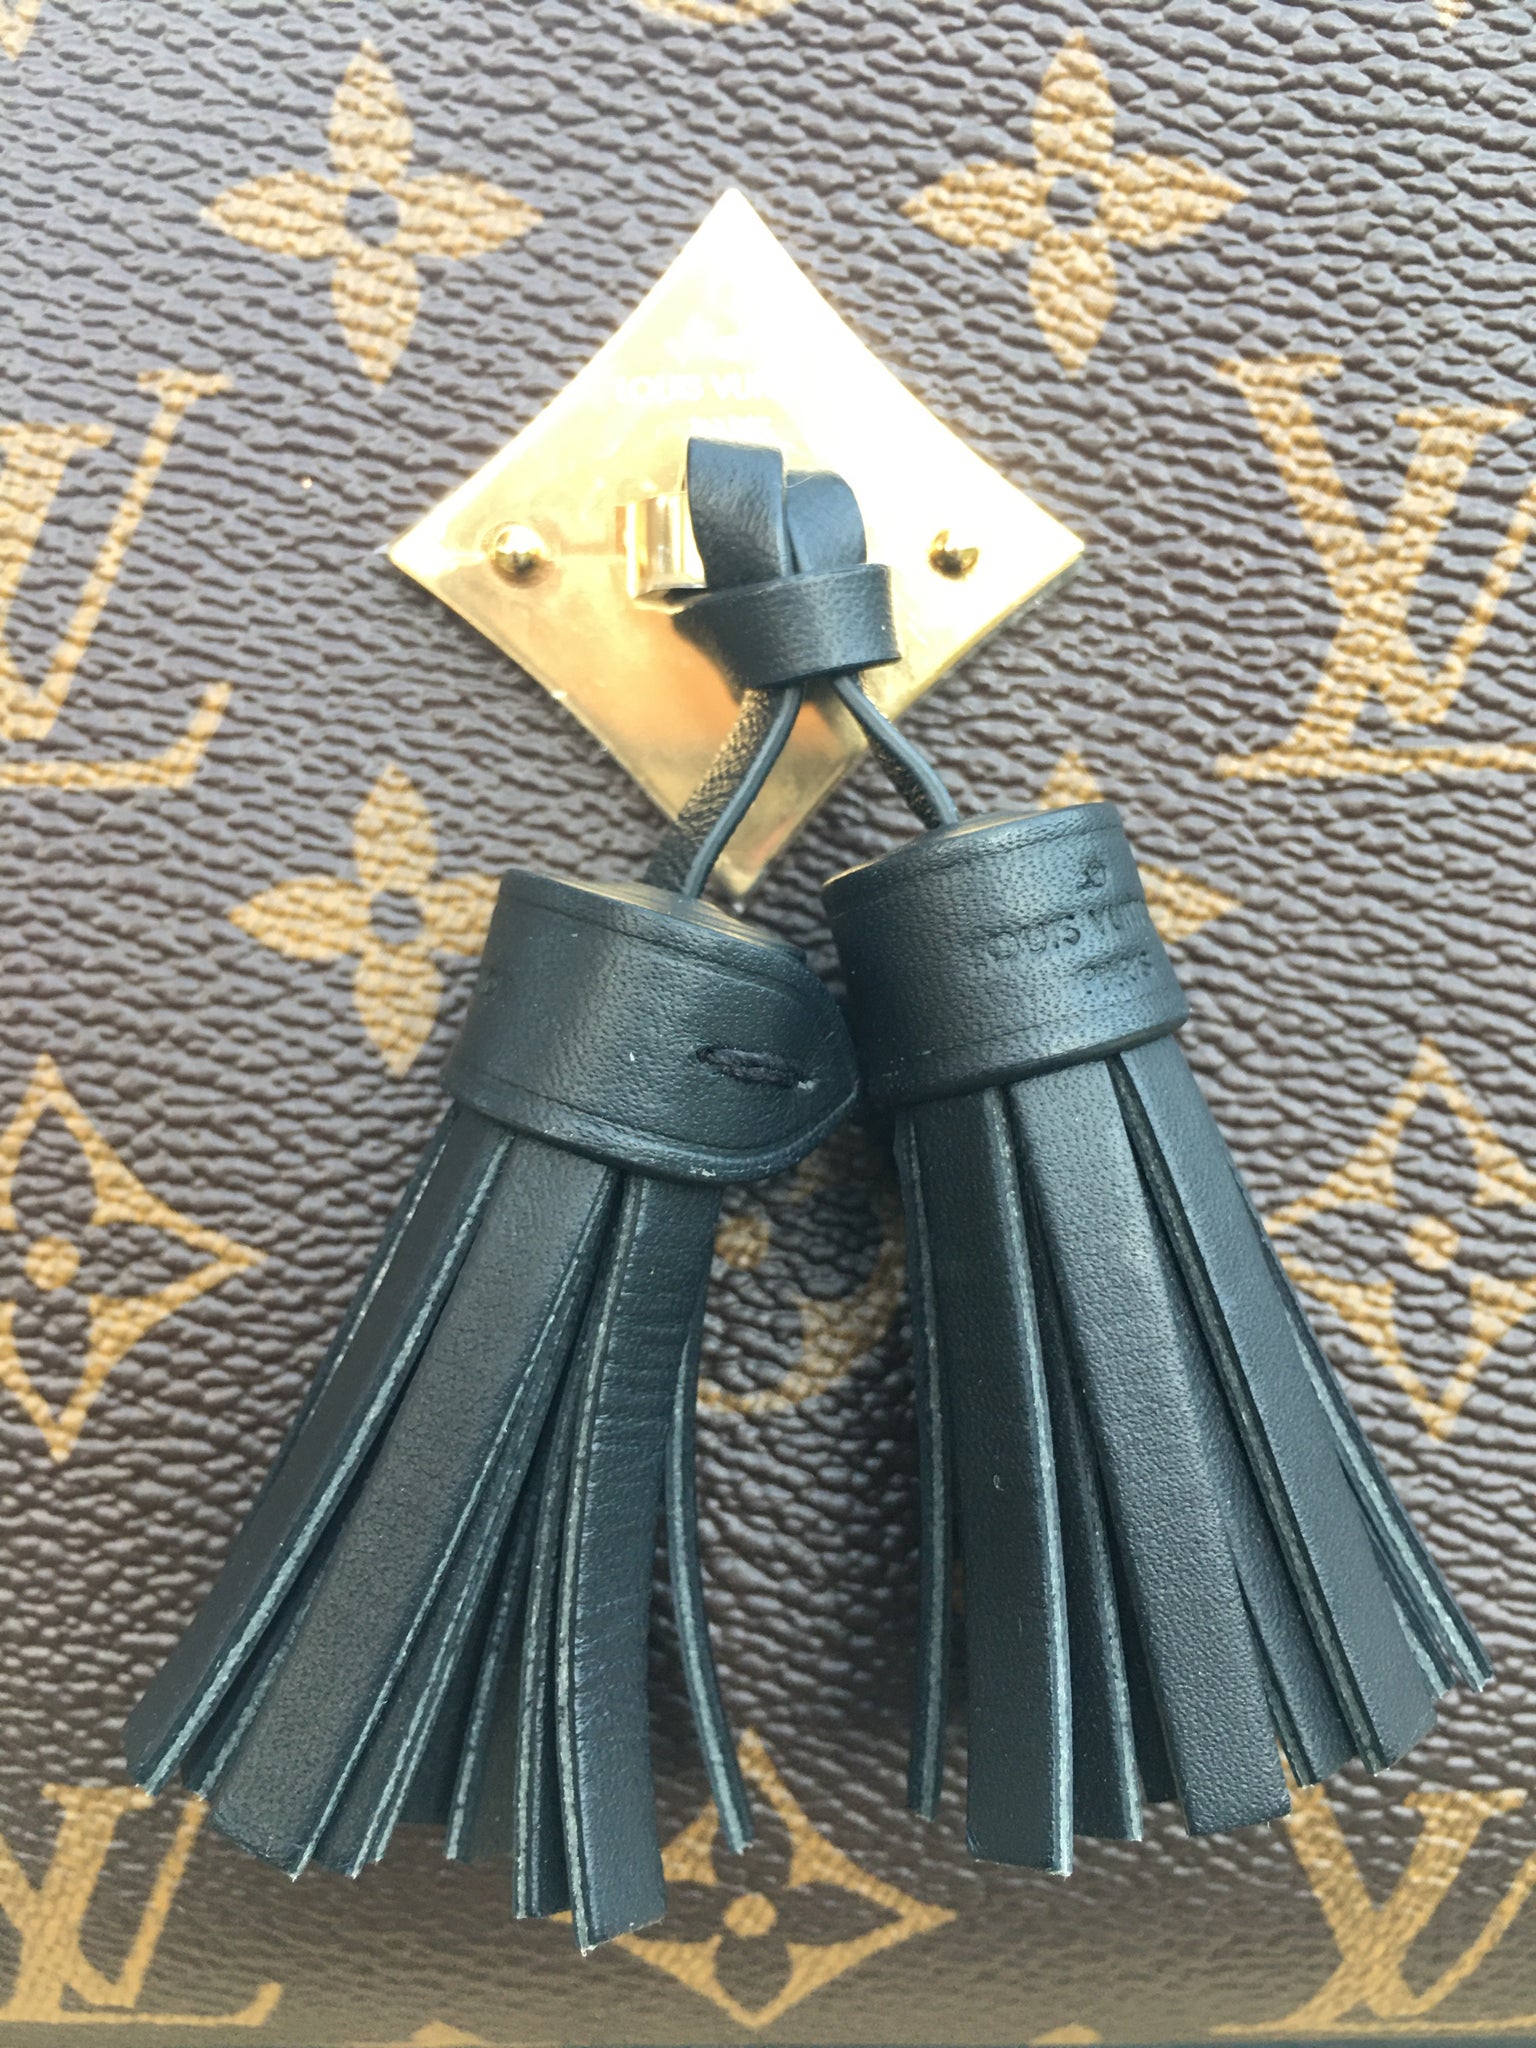 Louis Vuitton Tassel Bag Charm in Monogram Noir - SOLD